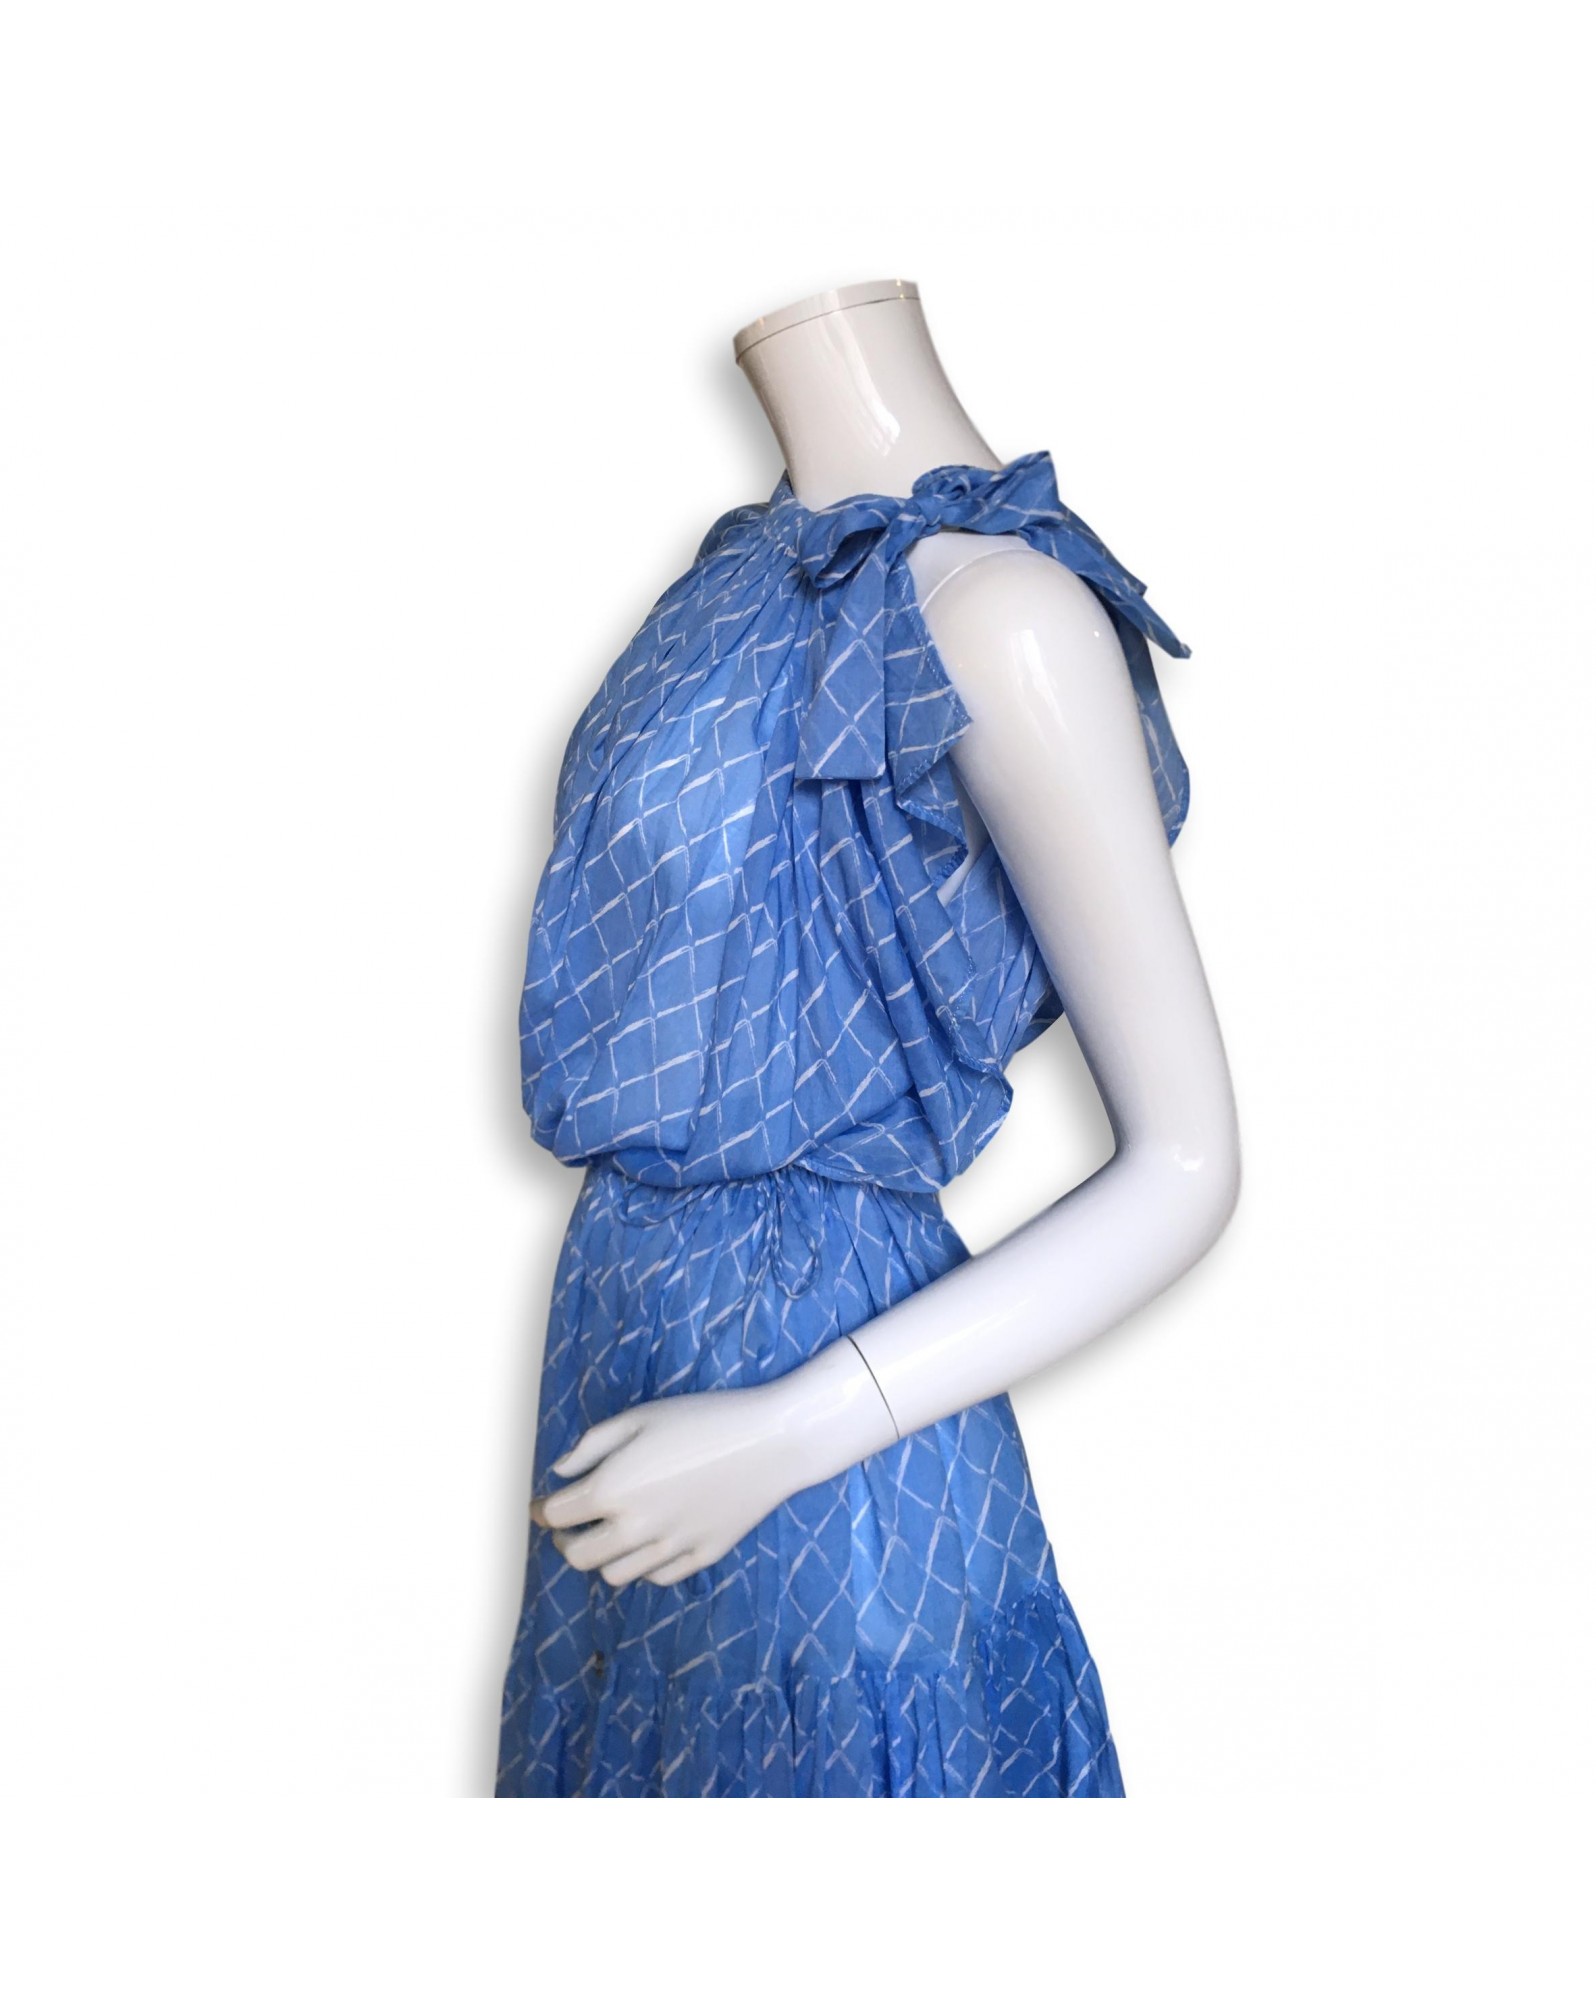 Chanel Blue Dress